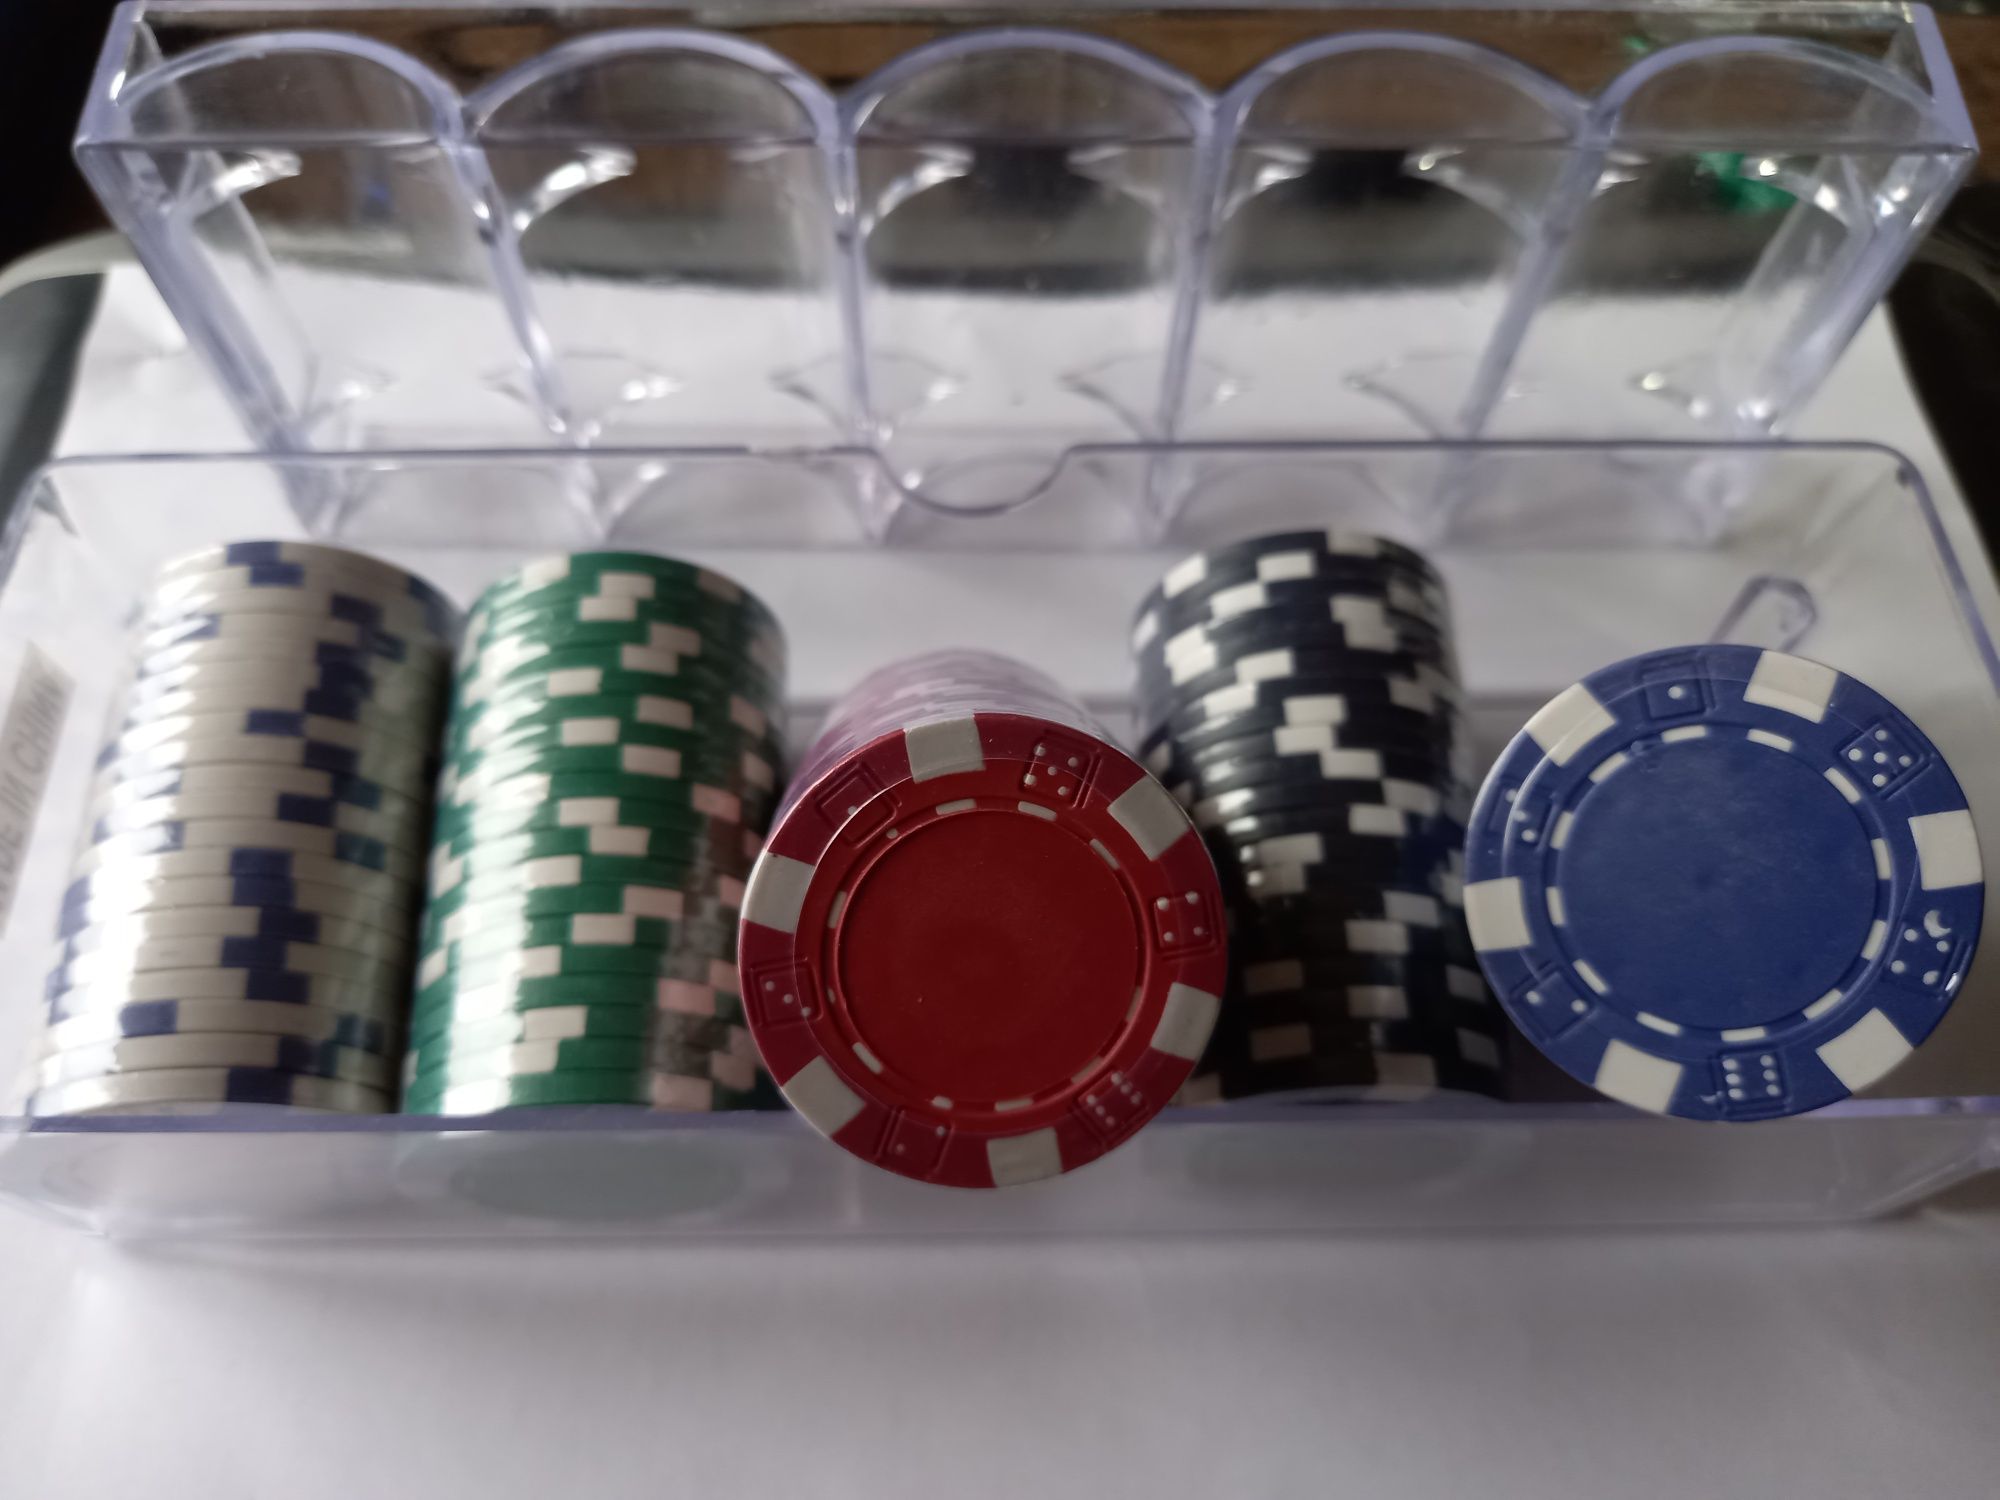 Jetoane poker, 11 grame, 100 buc, cazinou, neimprimate. Sigilate!